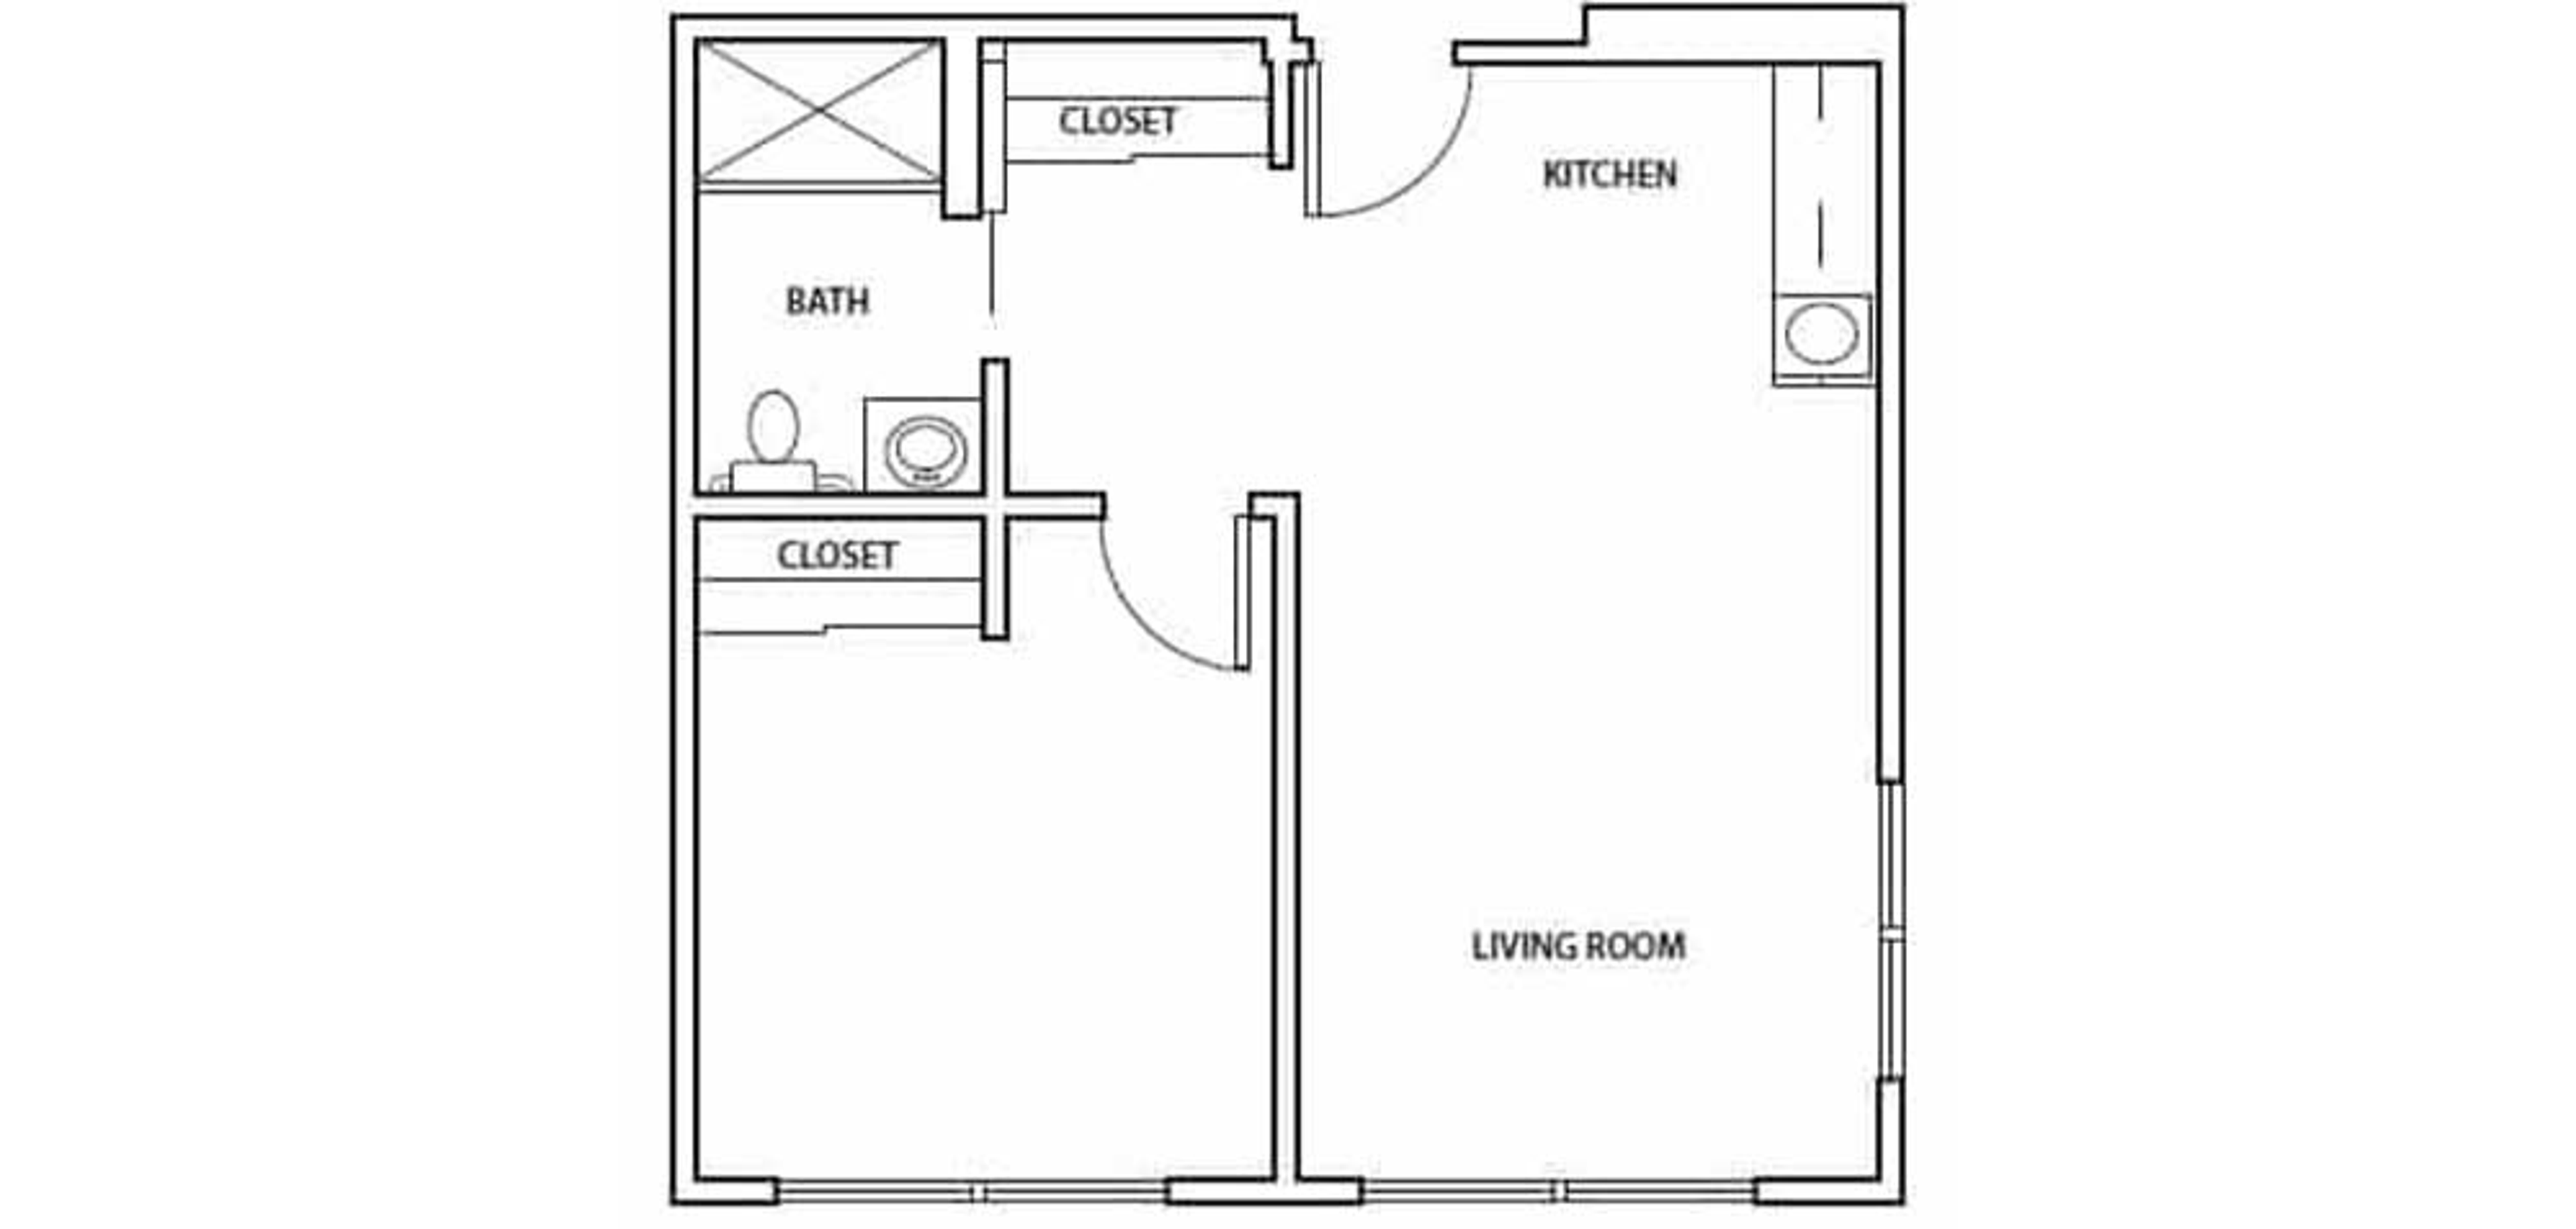 Floorplan - Princeton Village - 1B 1B 530 or 565 sq. ft. Assisted Living